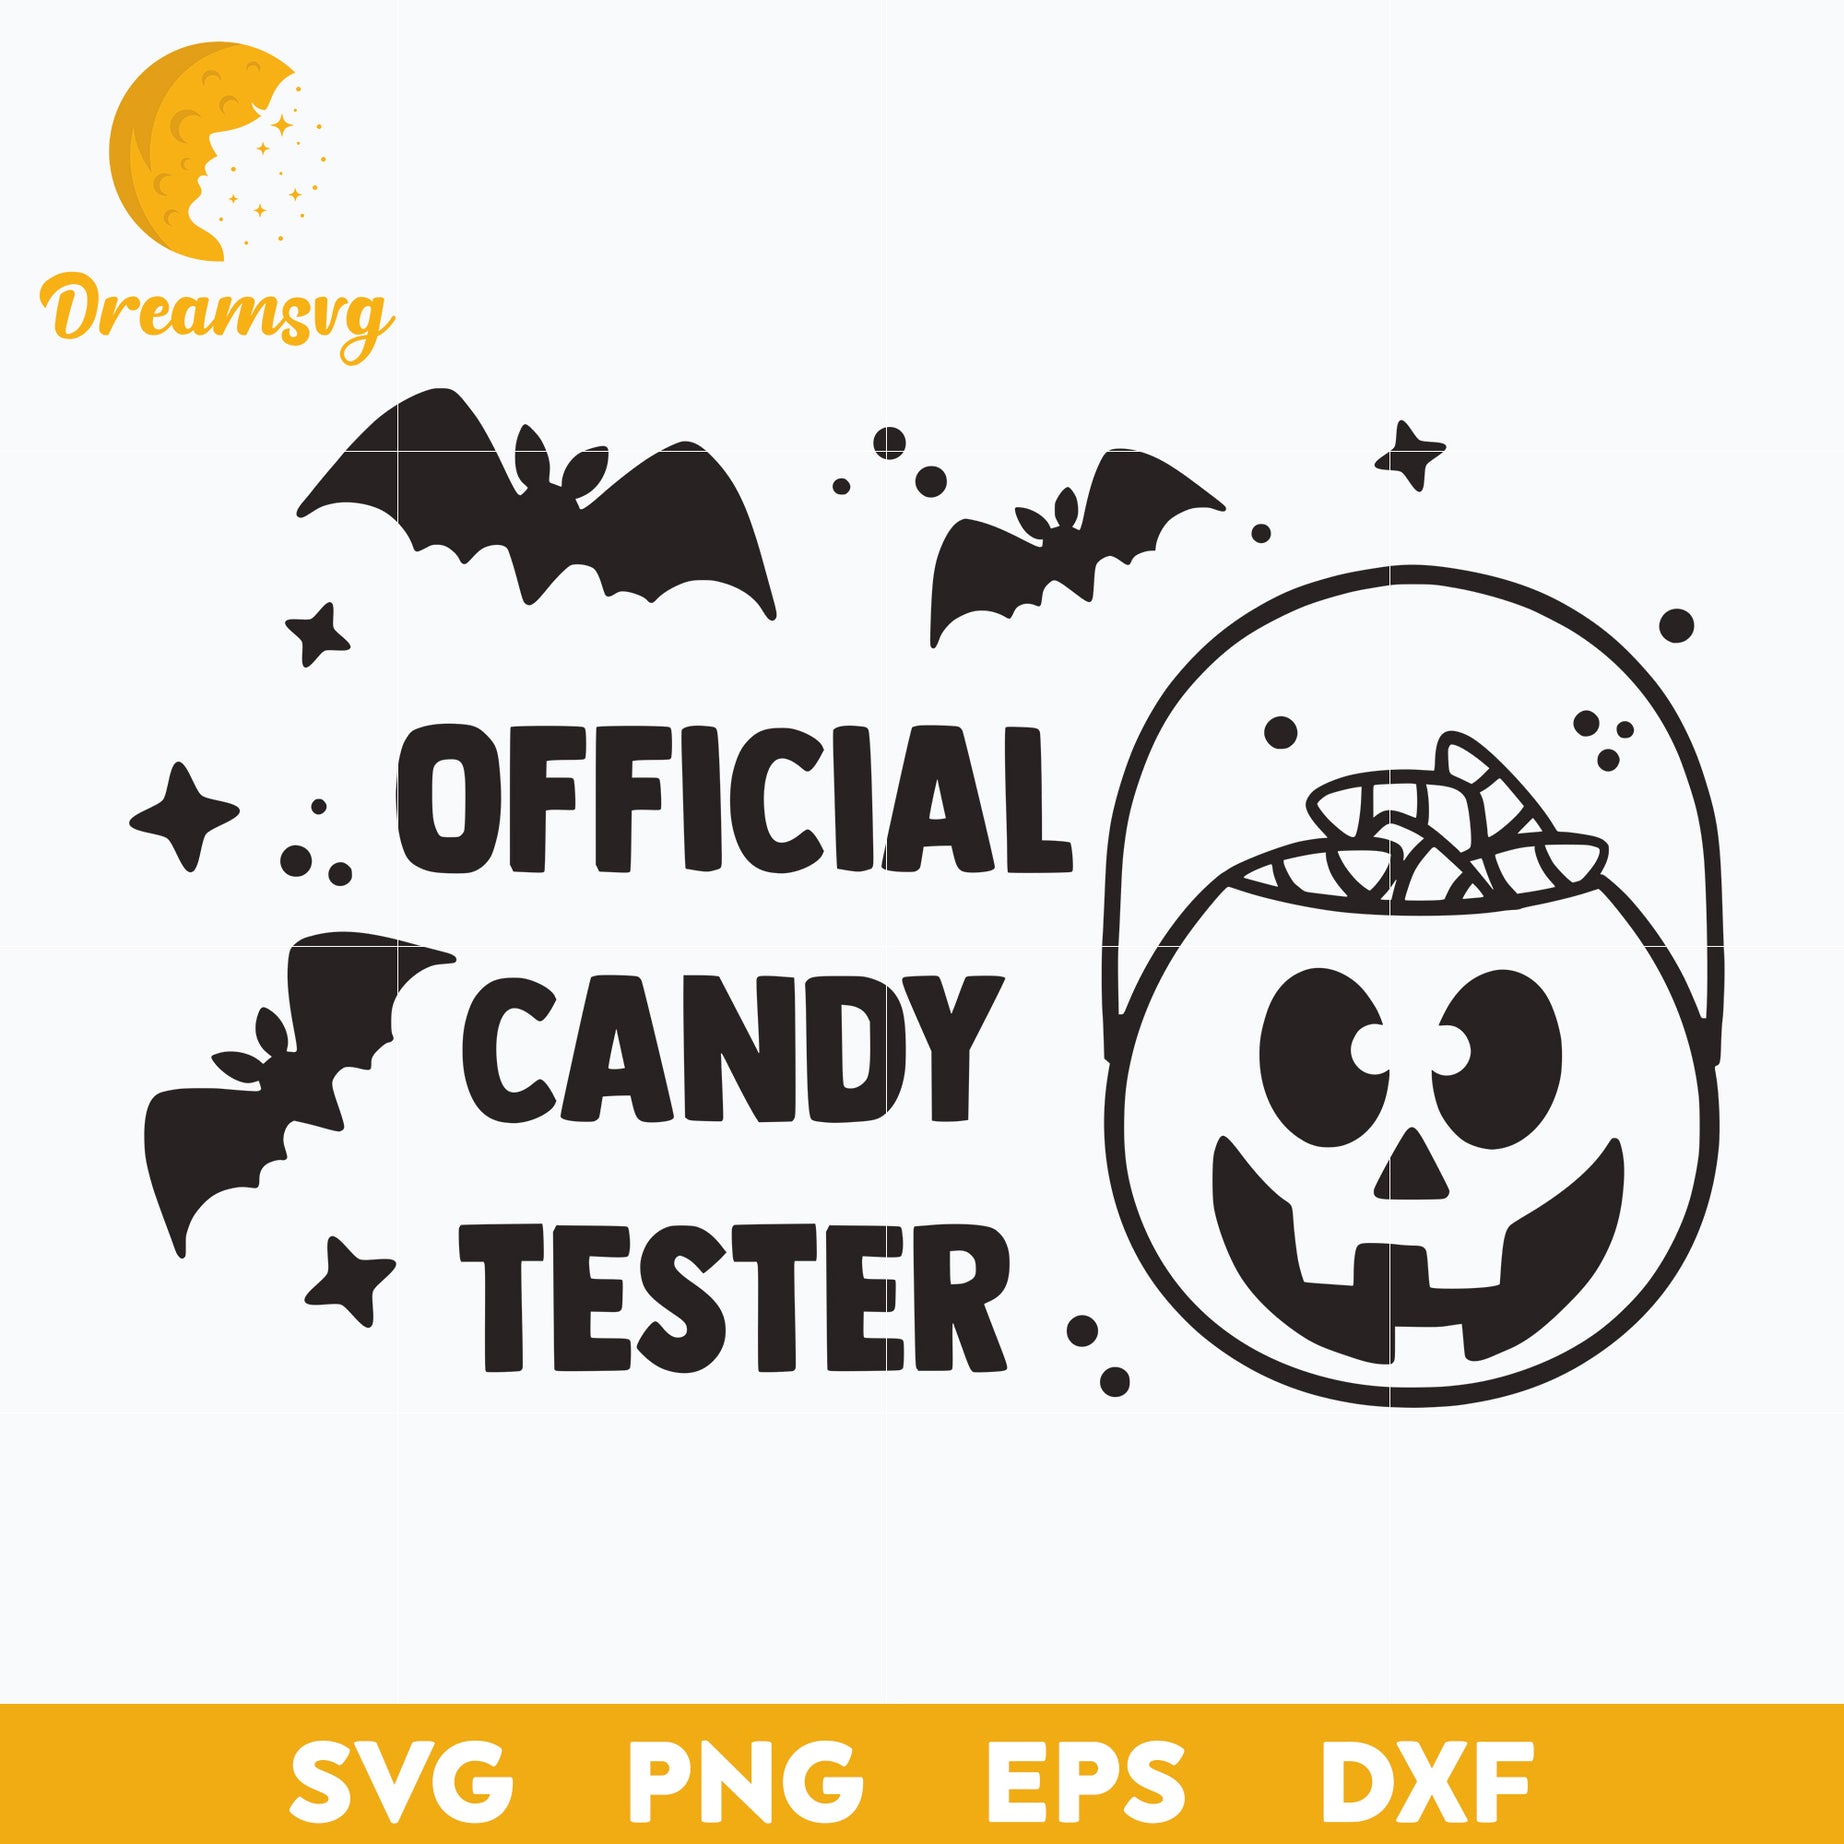 Official Candy Tester SVG, Halloween svg, png, dxf, eps digital file.